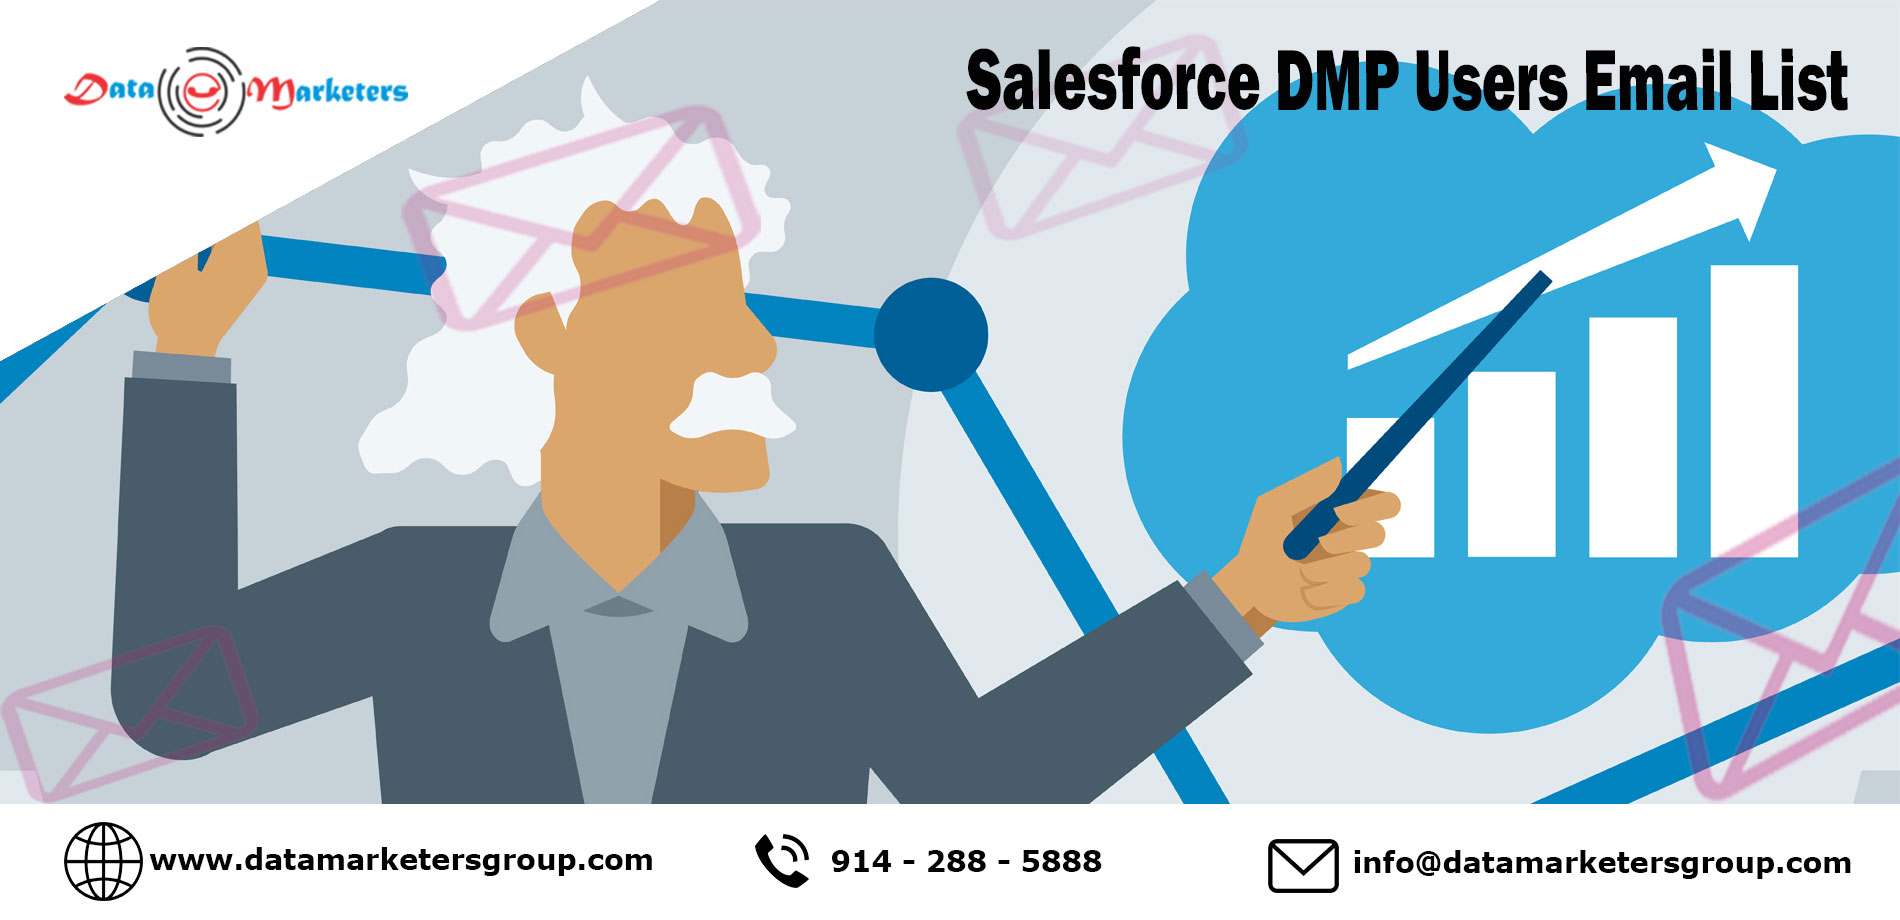 Salesforce DMP Users List | Salesforce DMP Users Email List